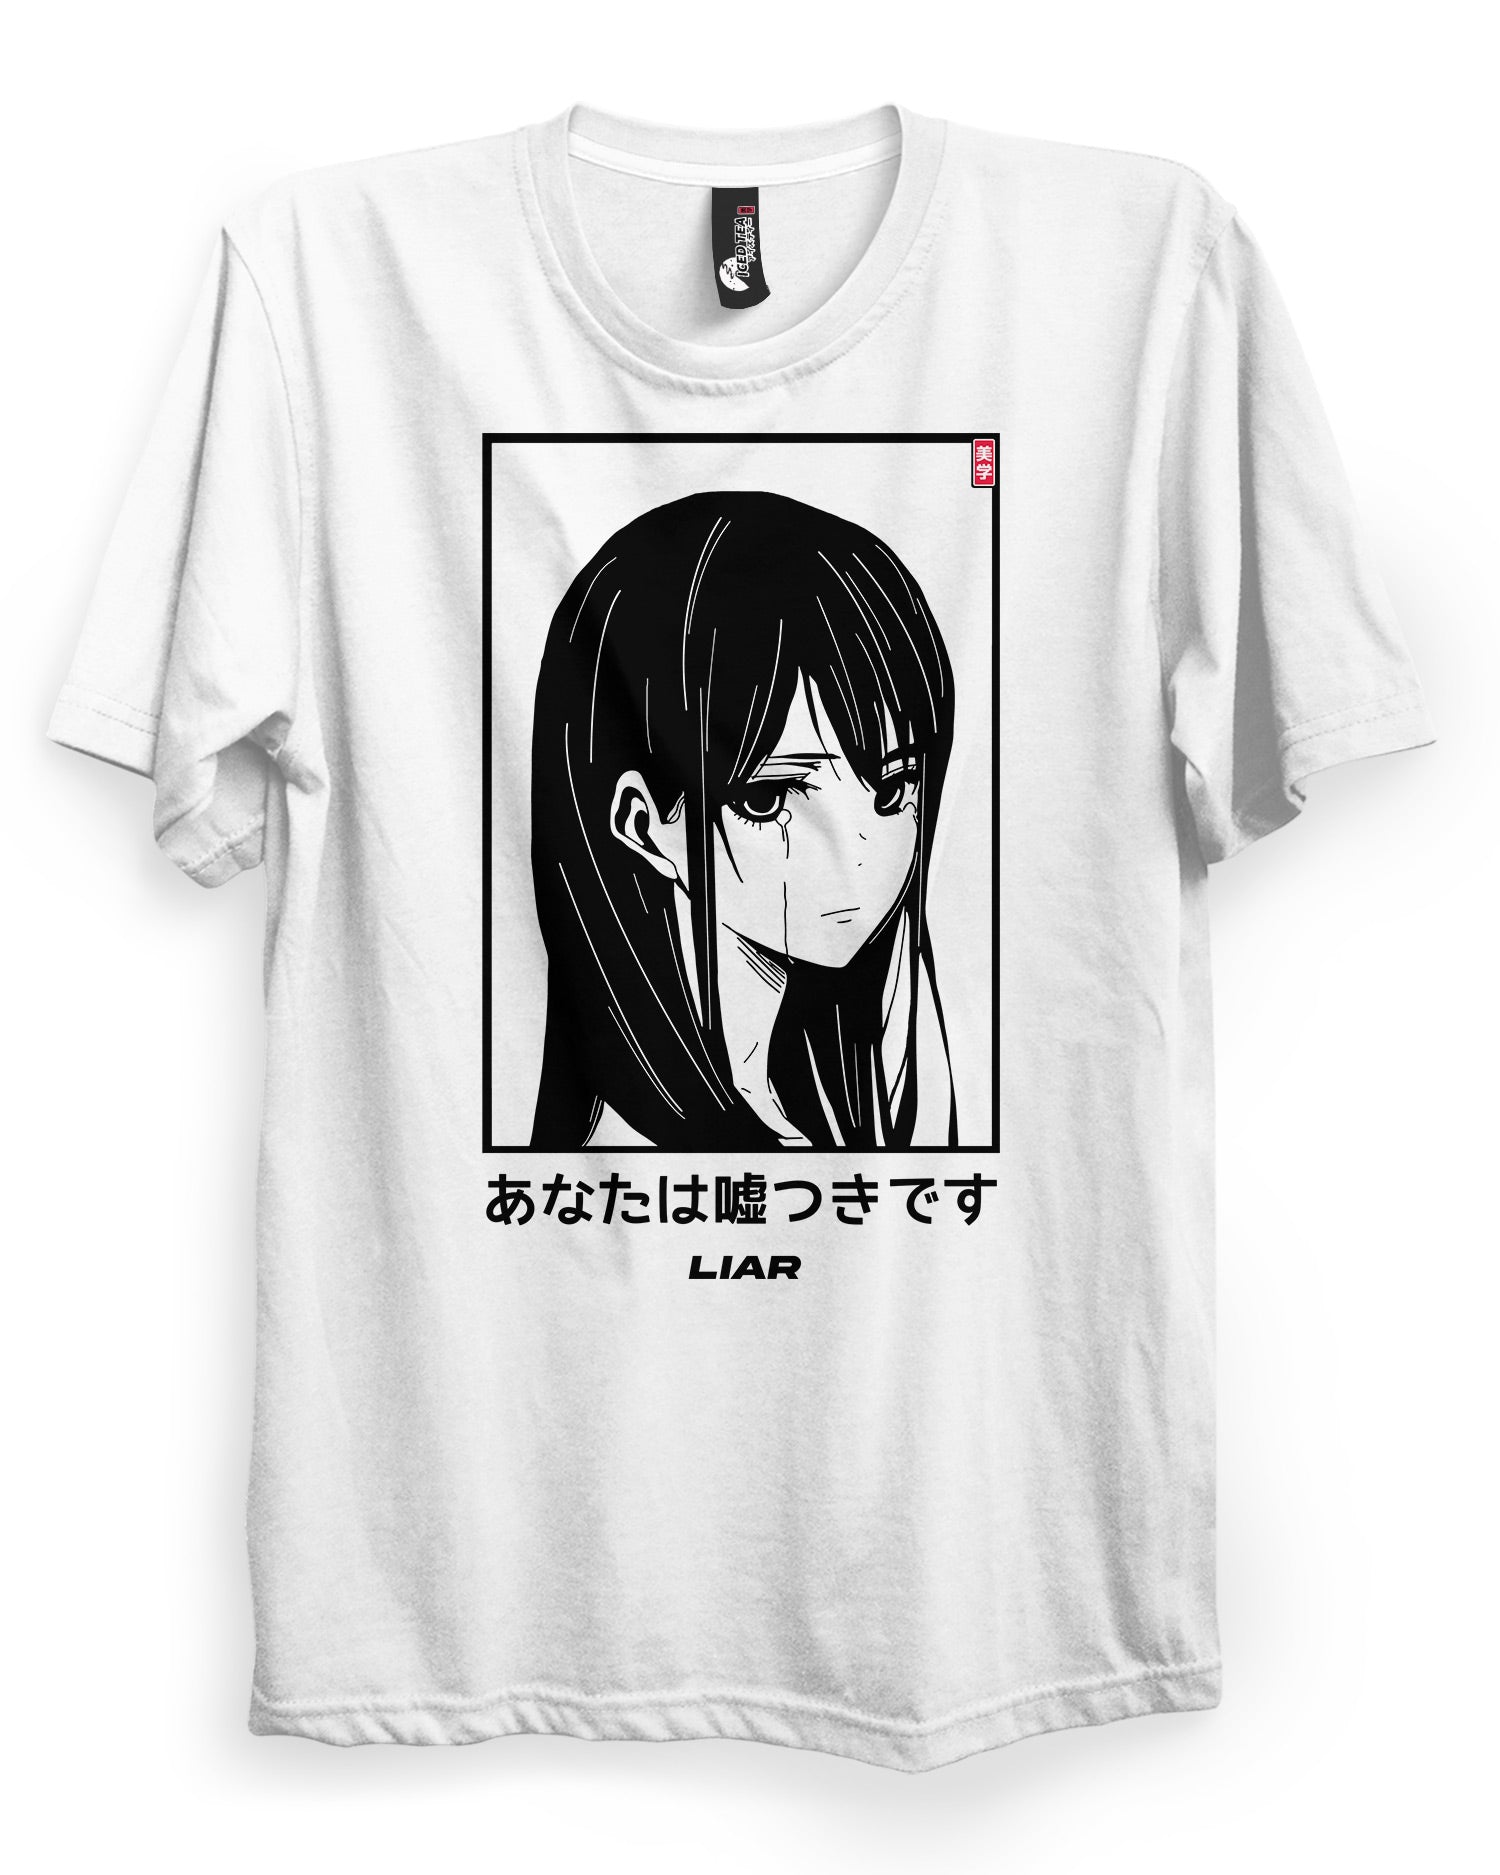 LIAR (うそつき) - Anime T-Shirt - Dark Aesthetics and Anime Clothing Streetwear